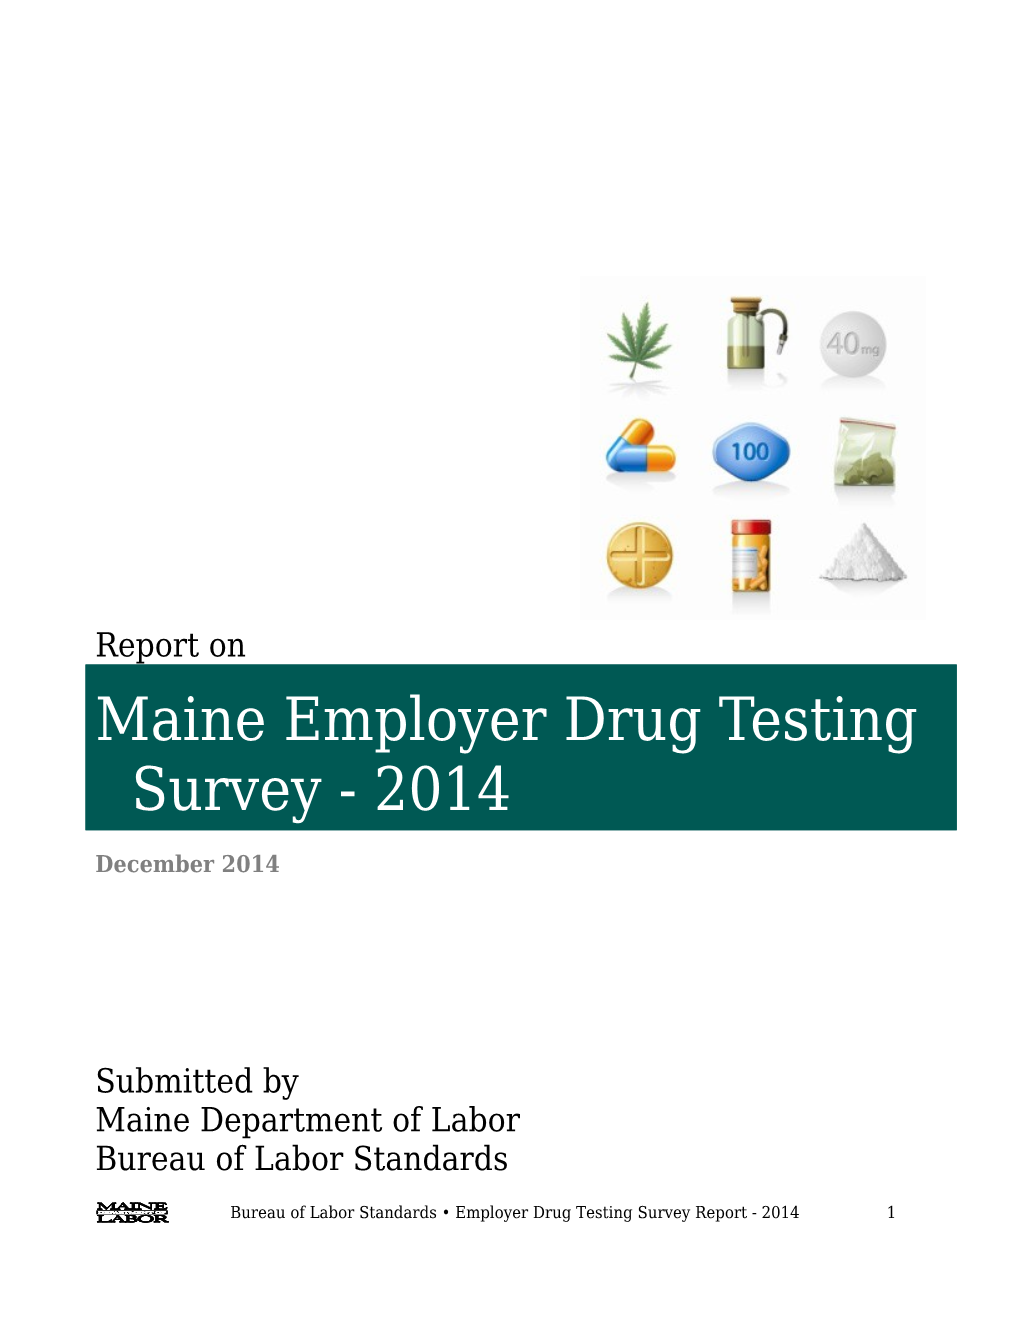 2014 Maine Employer Drug Testing Survey